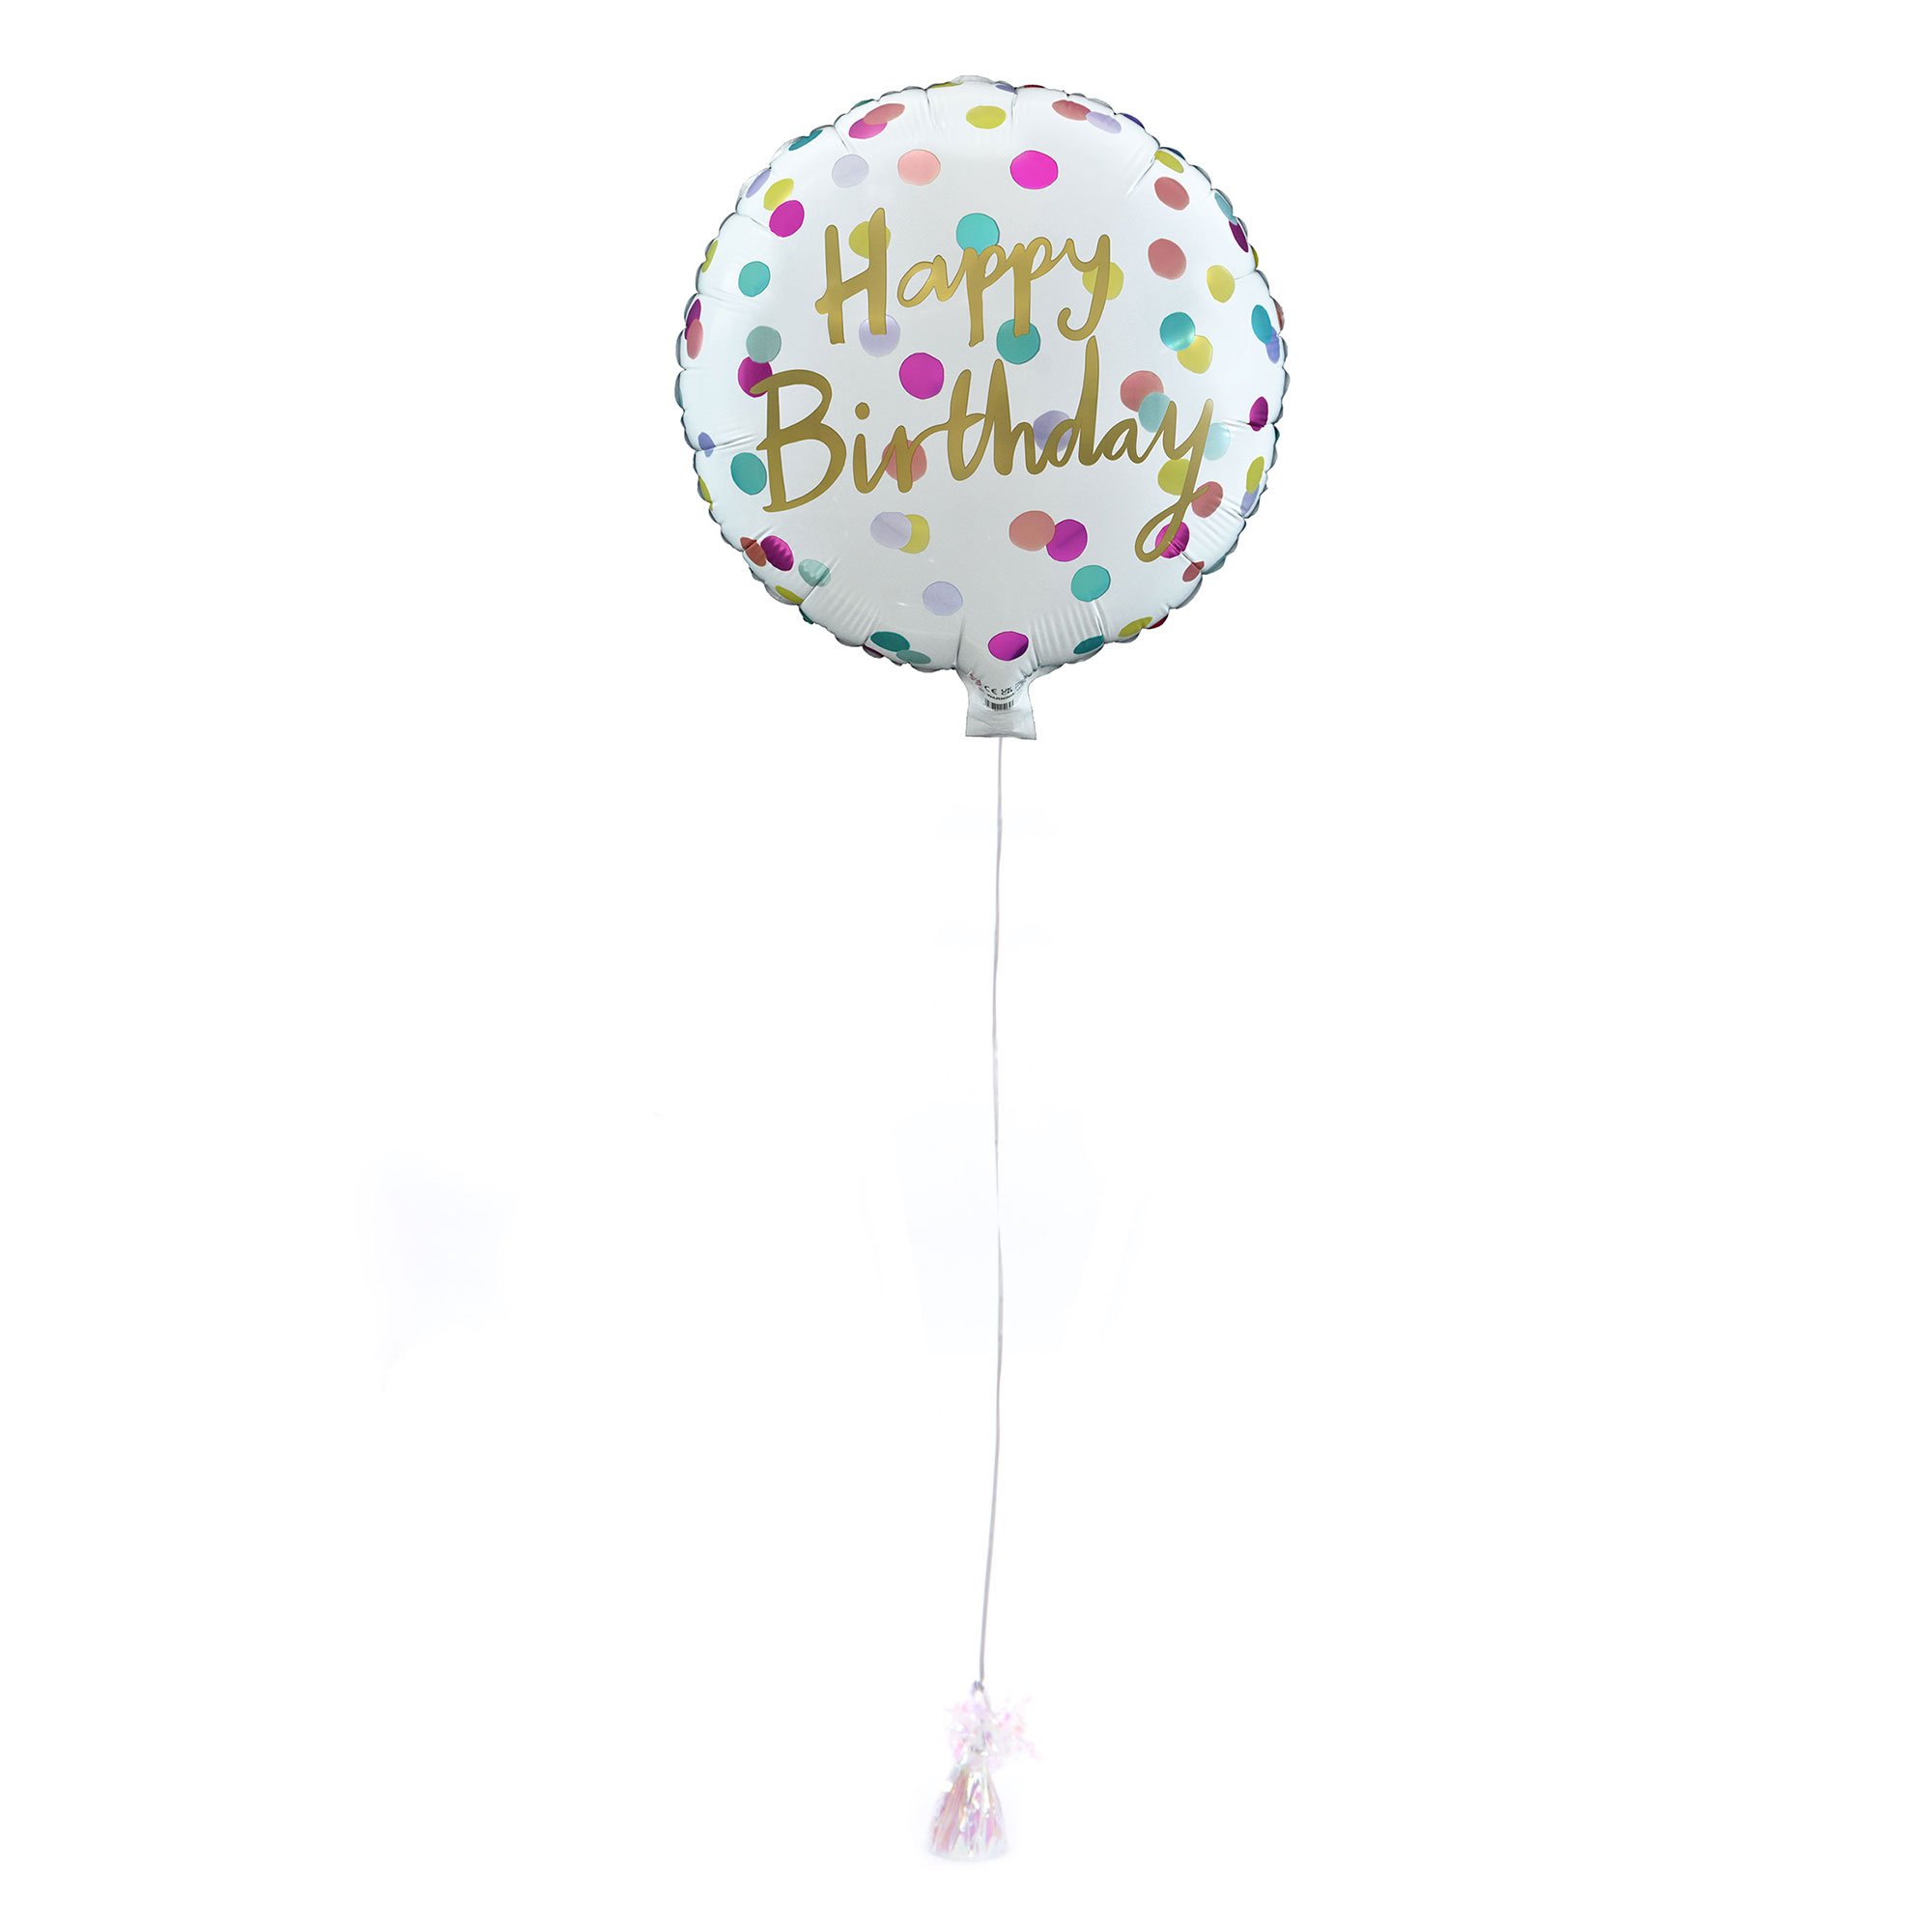 Spotty Happy Birthday Balloon & Lindt Chocolates - FREE GIFT CARD!